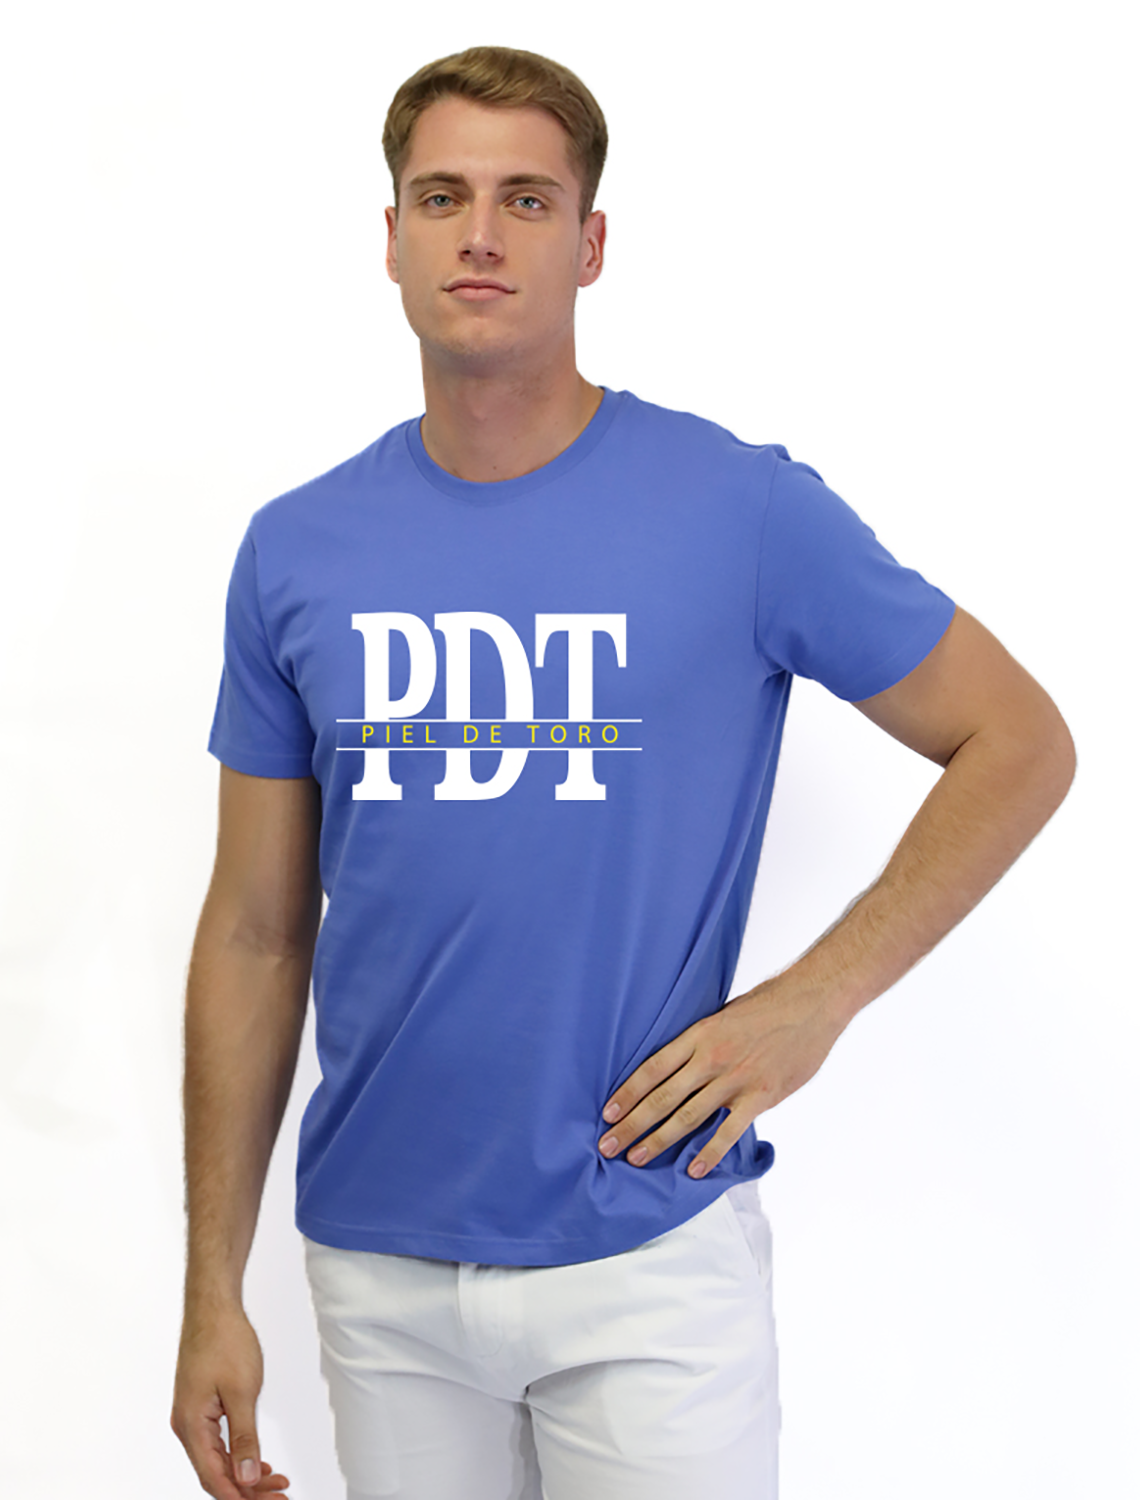 Camiseta de hombre PDT